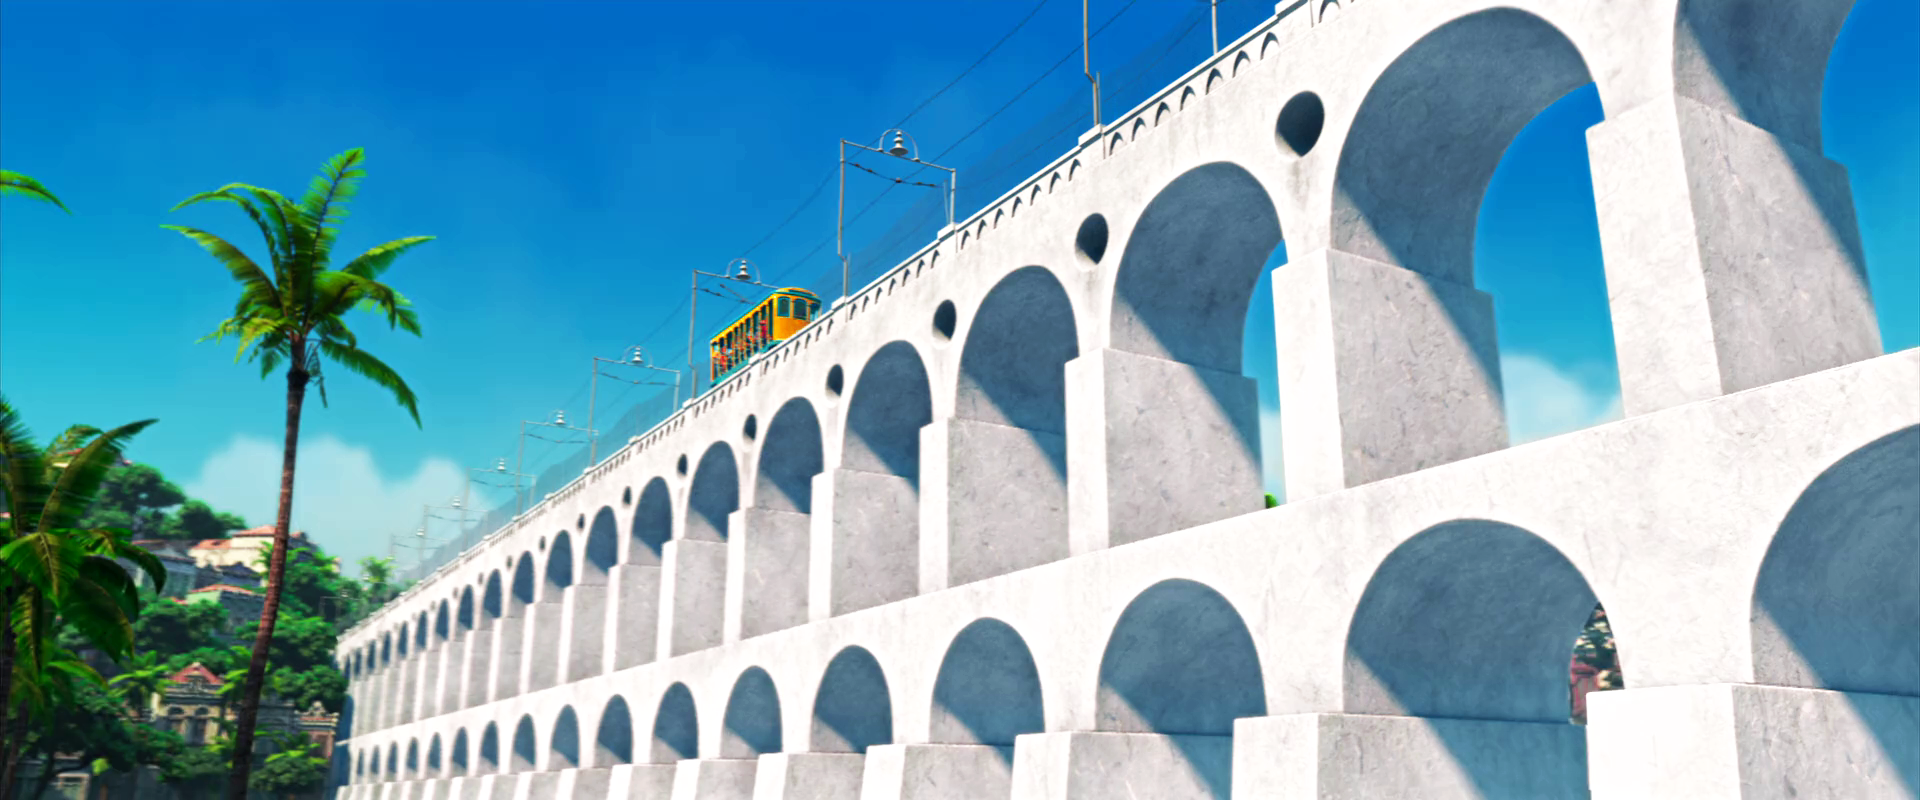 wallpaper desenho,viaduct,architecture,arch,fixed link,bridge